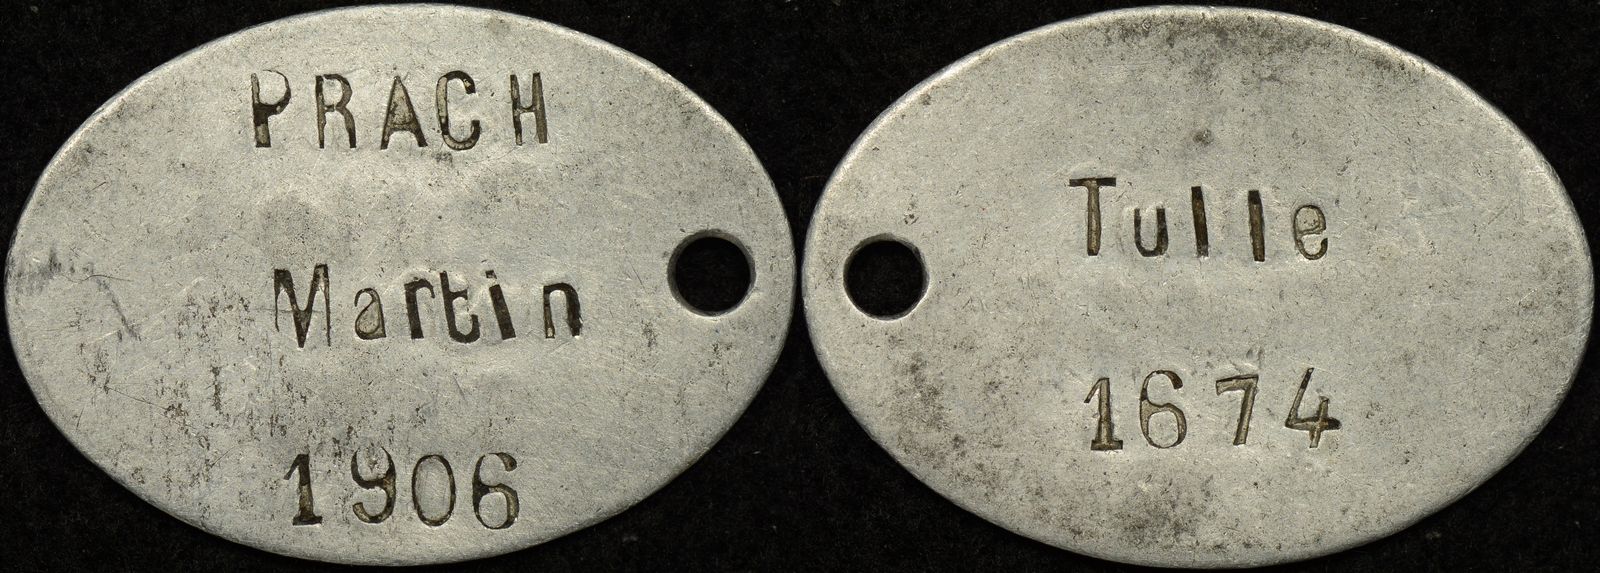 French Modele 1881 ID Disc – Martin Prach 1674